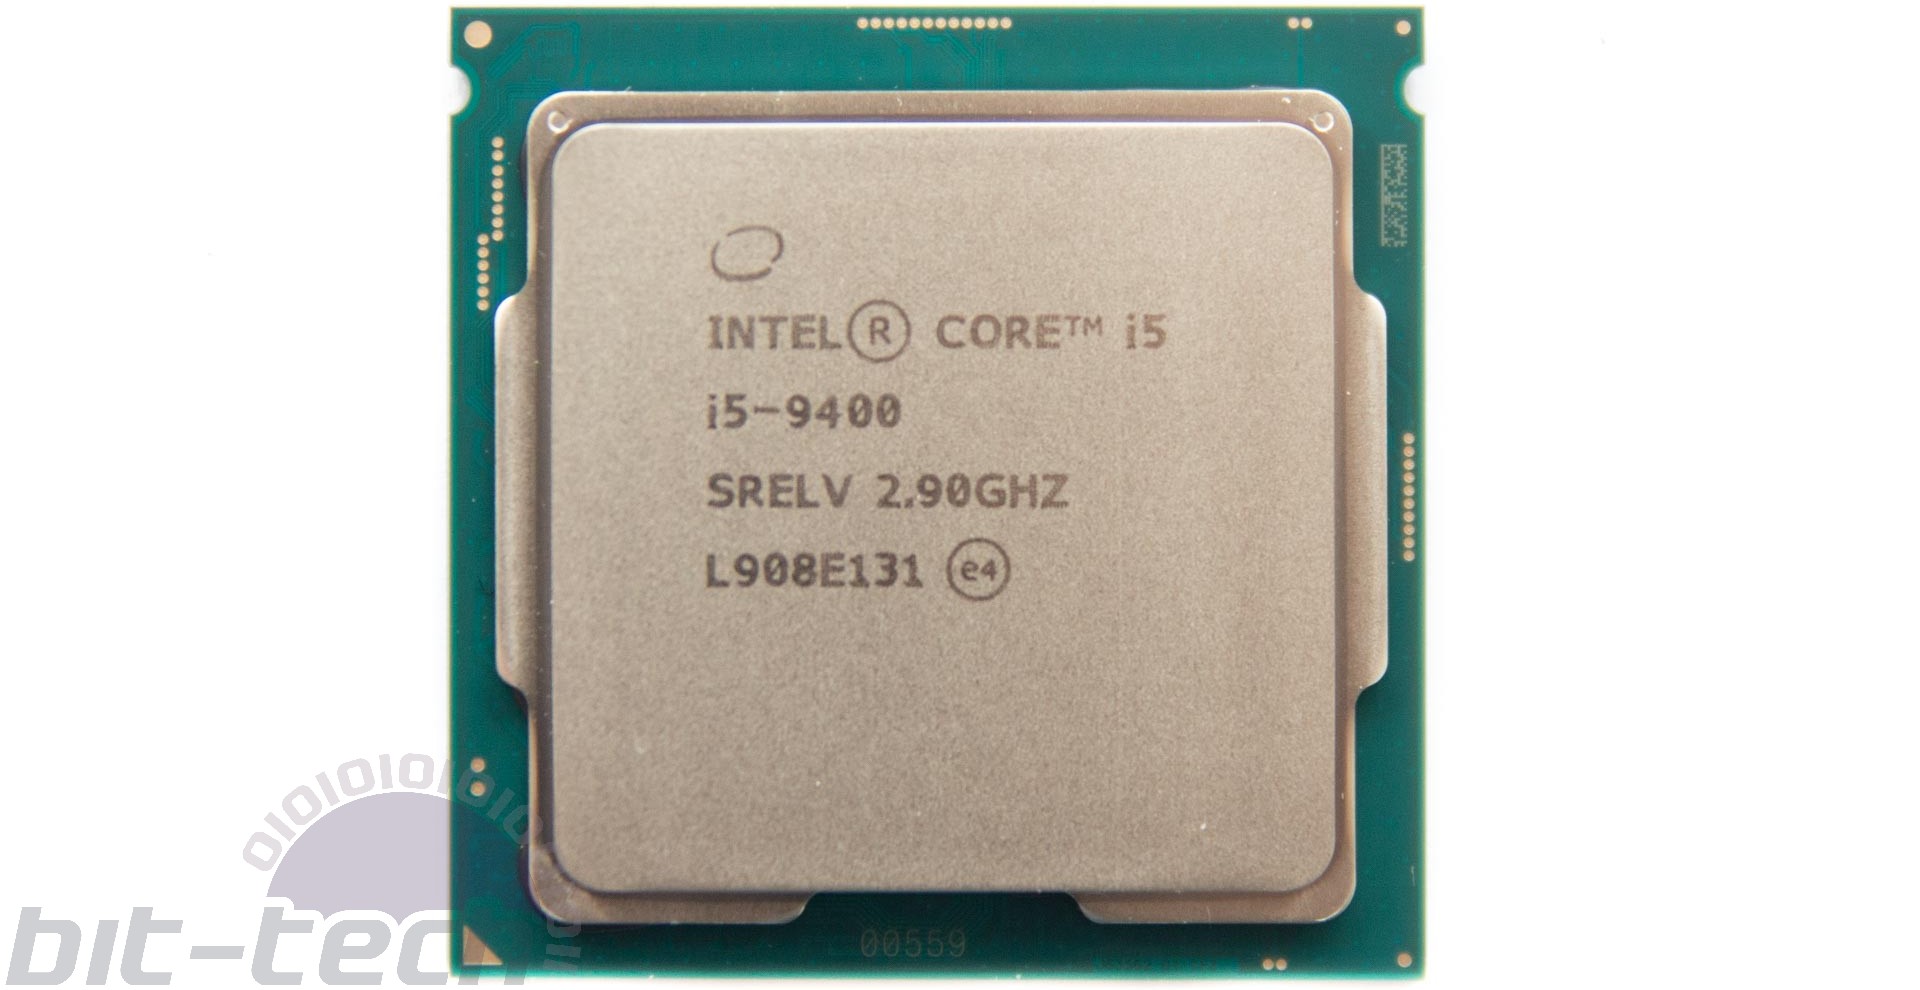 Medewerker ruilen kalmeren Intel Core i5-9400 Review | bit-tech.net